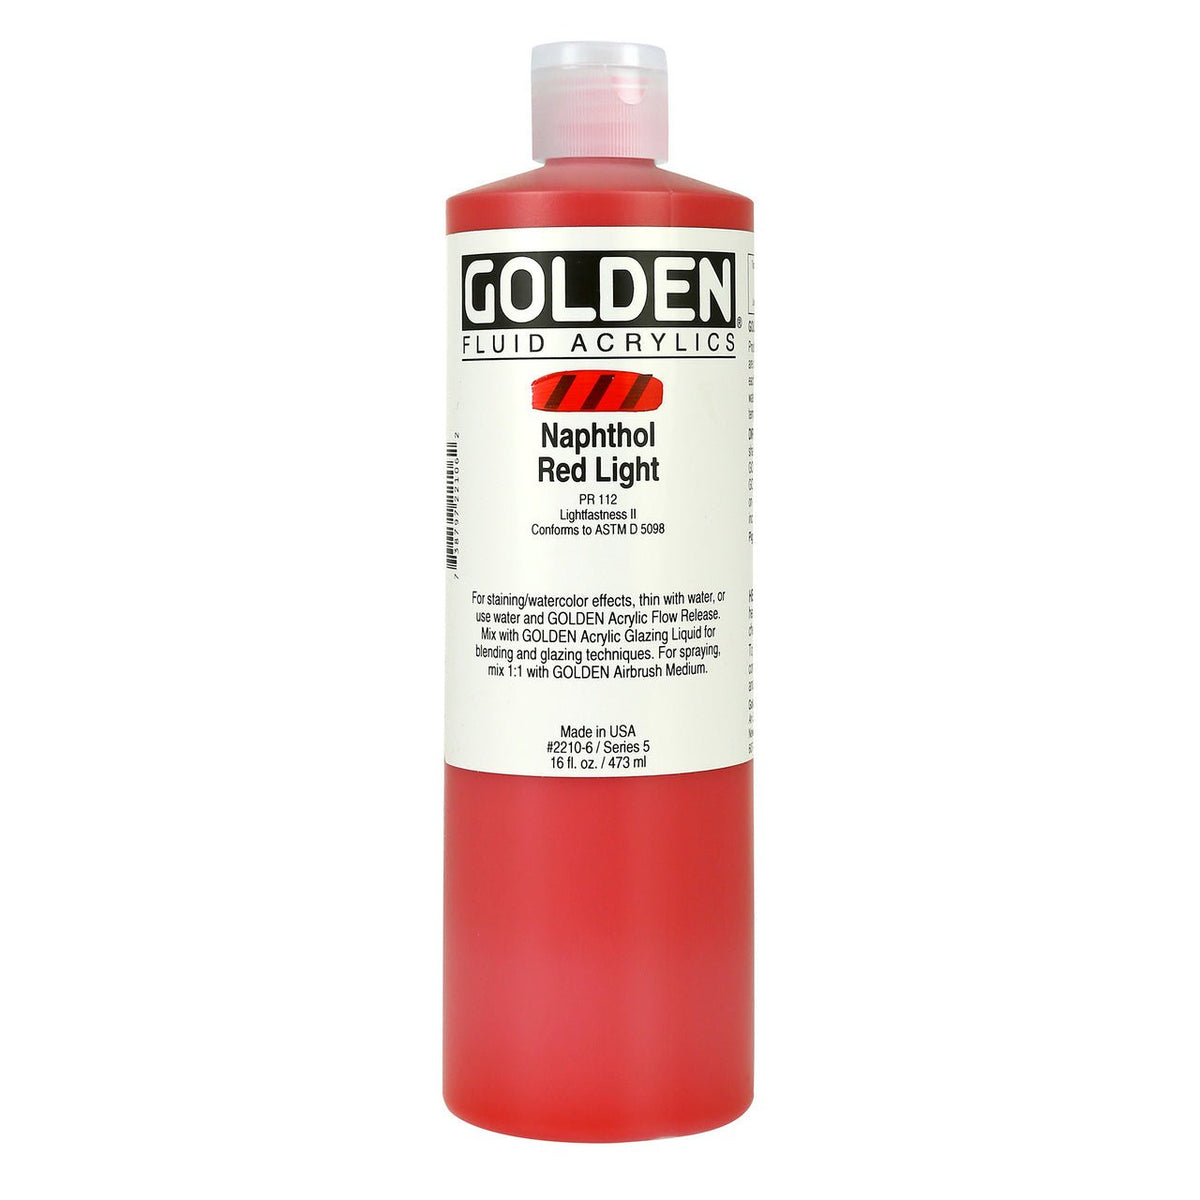 Golden Fluid Acrylic Naphthol Red Light 16 oz - merriartist.com